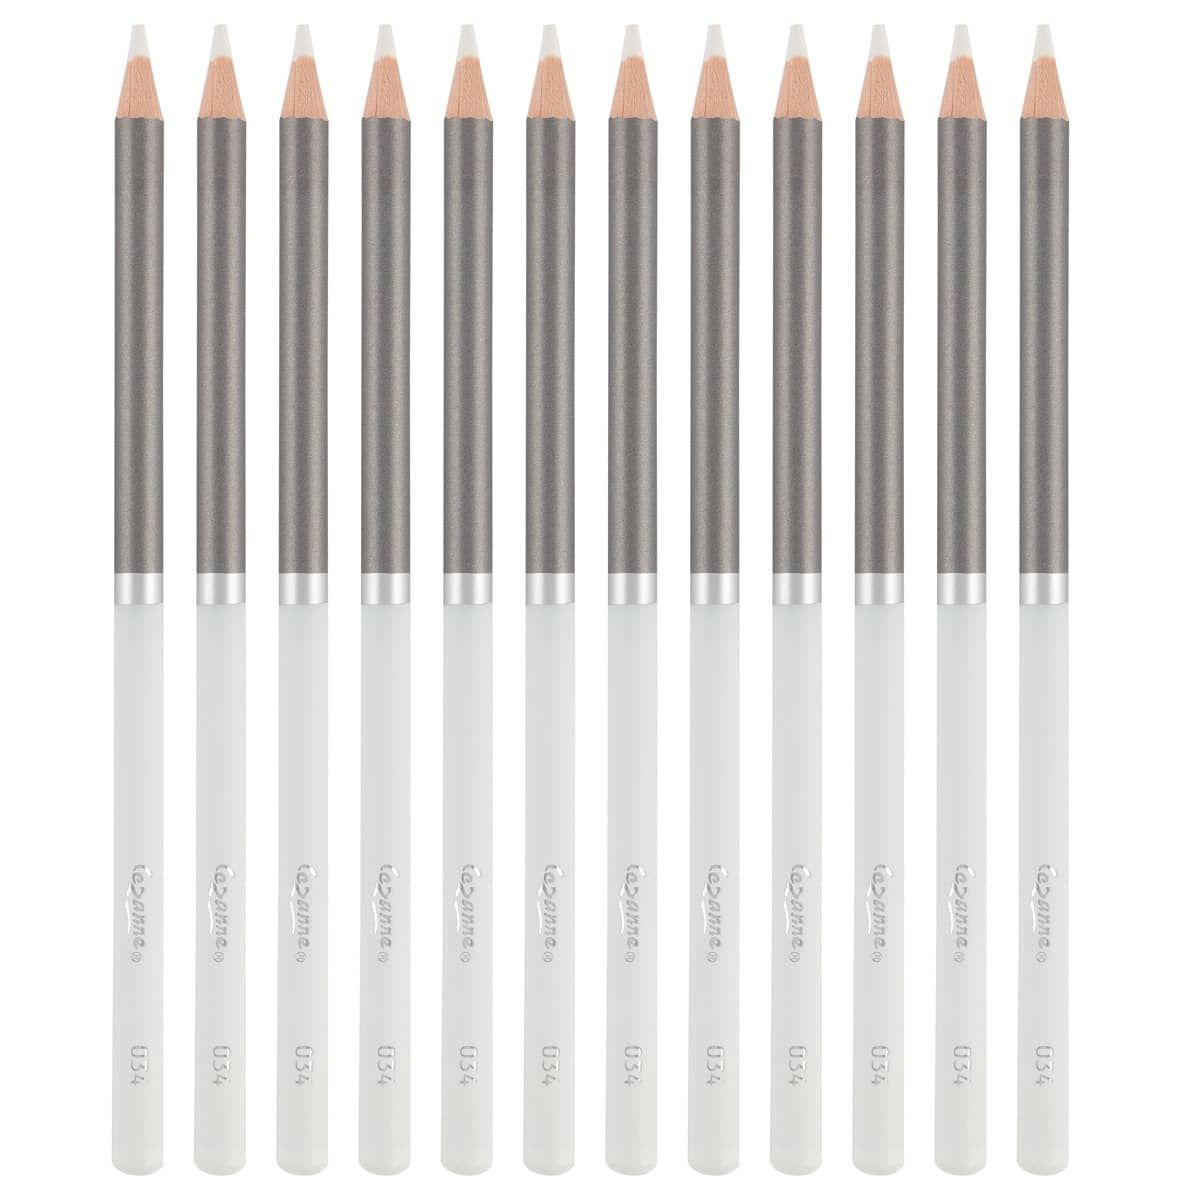 https://www.jerrysartarama.com/media/catalog/product/cache/ecb49a32eeb5603594b082bd5fe65733/c/e/cezanne-white-colored-pencil-set-of-12-composite-90408.jpg